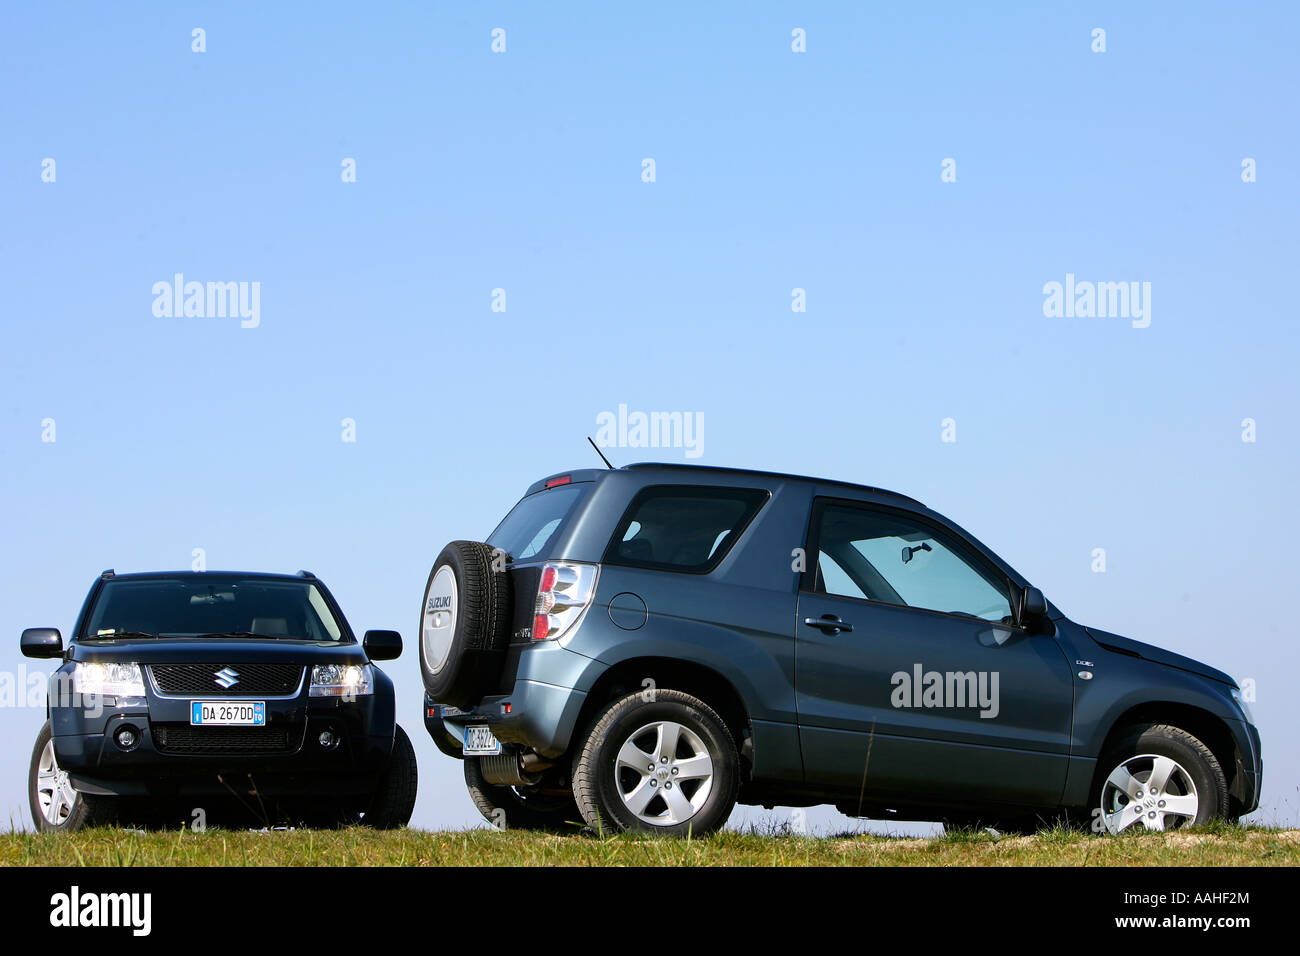 Suzuki vitara hi-res stock photography and images - Alamy